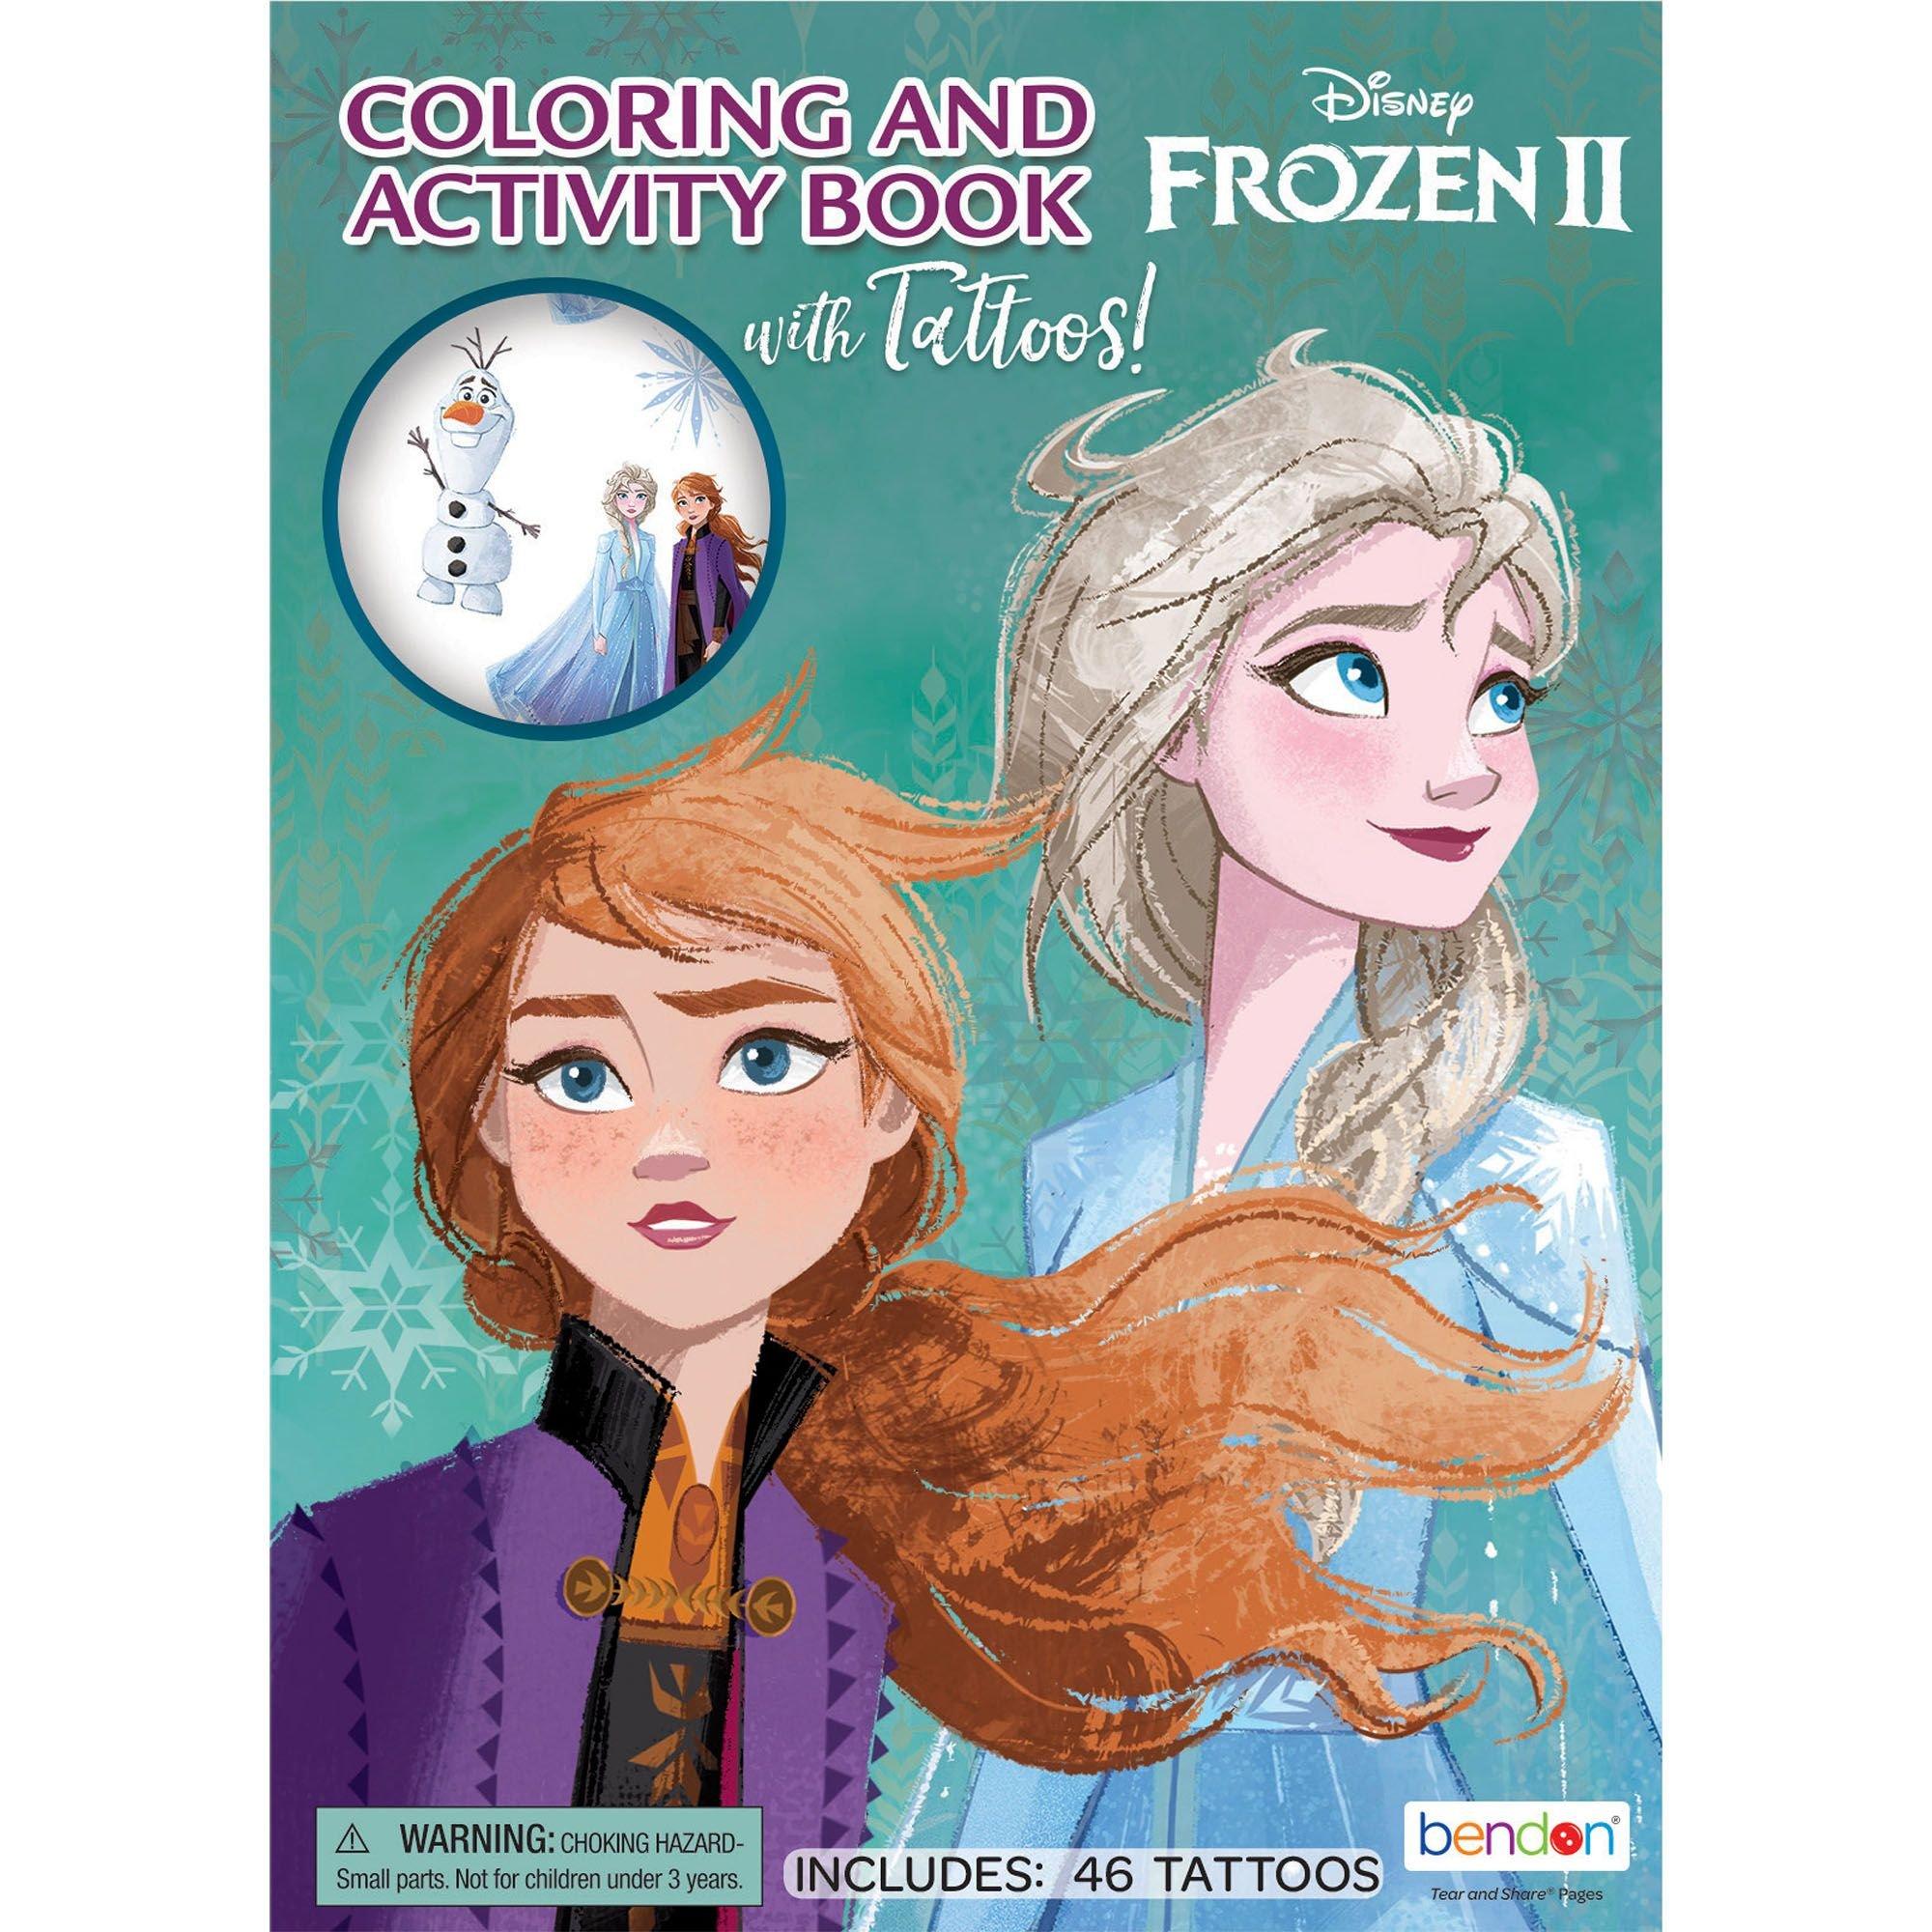 72 Wholesale Disney's Frozen Jumbo Coloring Books In Spanish - at 